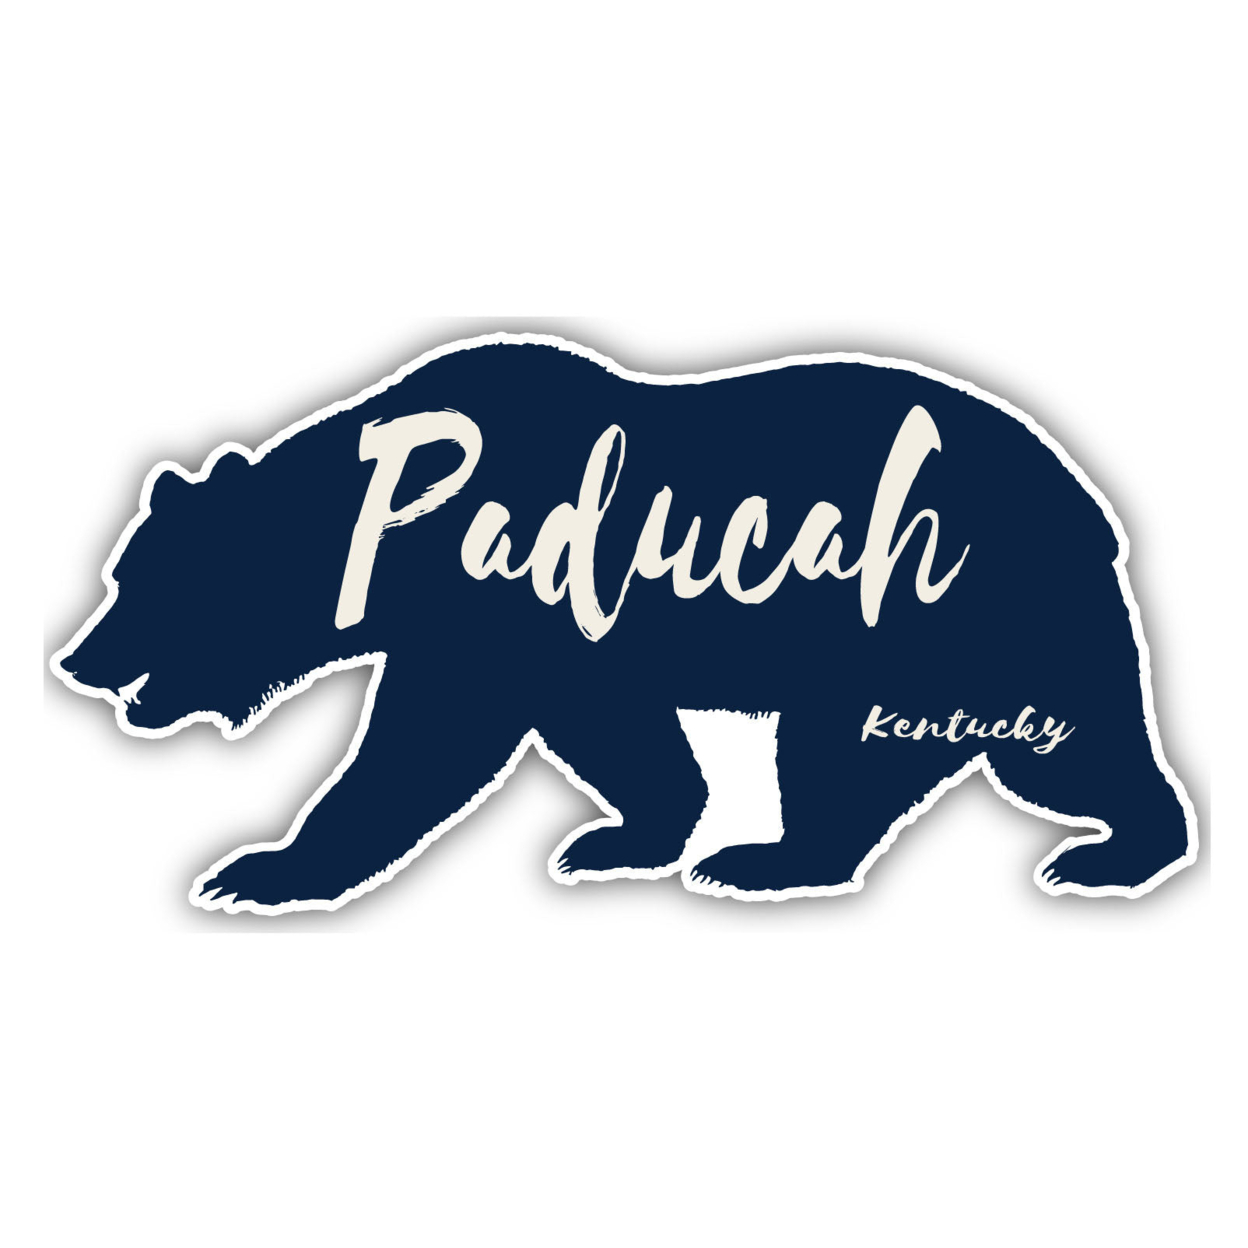 Paducah Kentucky Souvenir Decorative Stickers (Choose Theme And Size) - Single Unit, 2-Inch, Bear